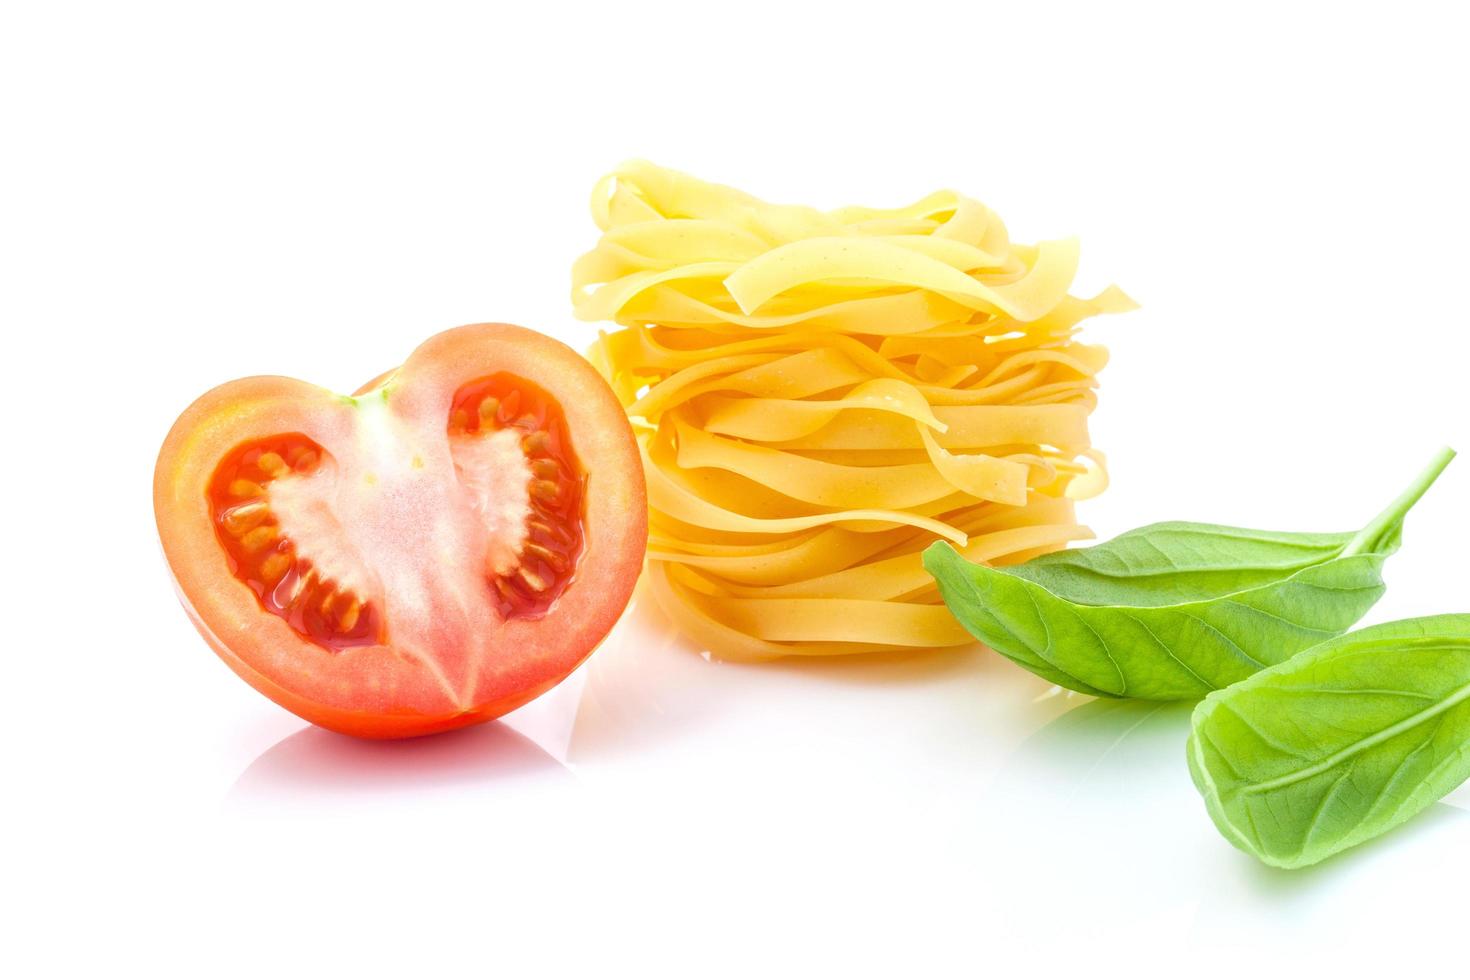 Tomato, pasta, and basil photo